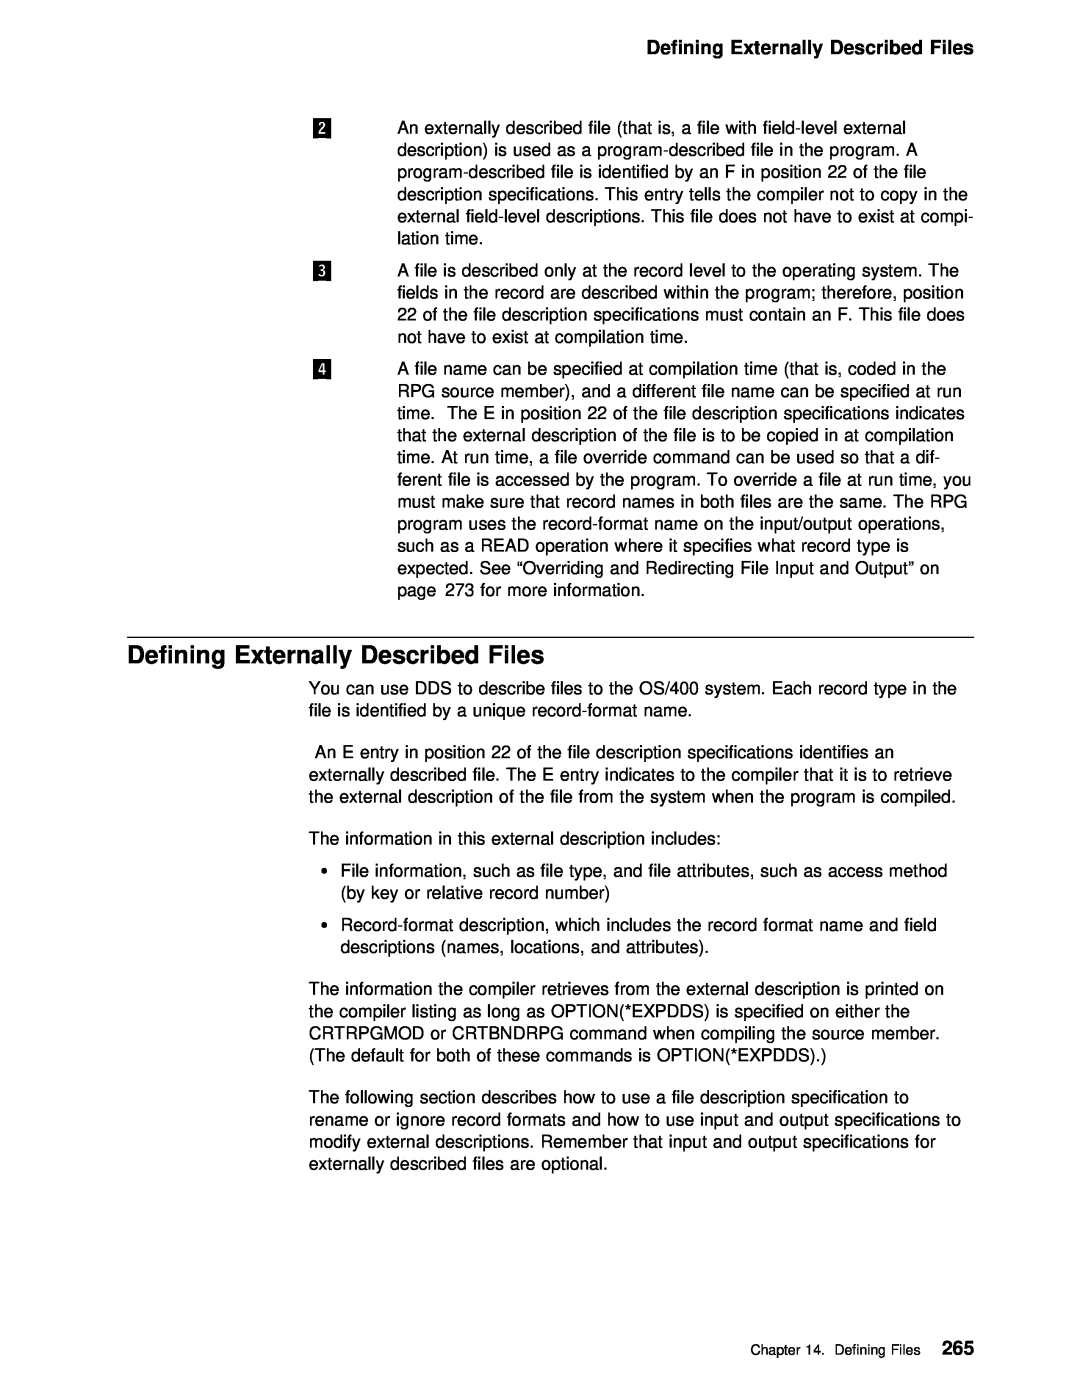 IBM AS/400 manual Defining Externally Described Files 